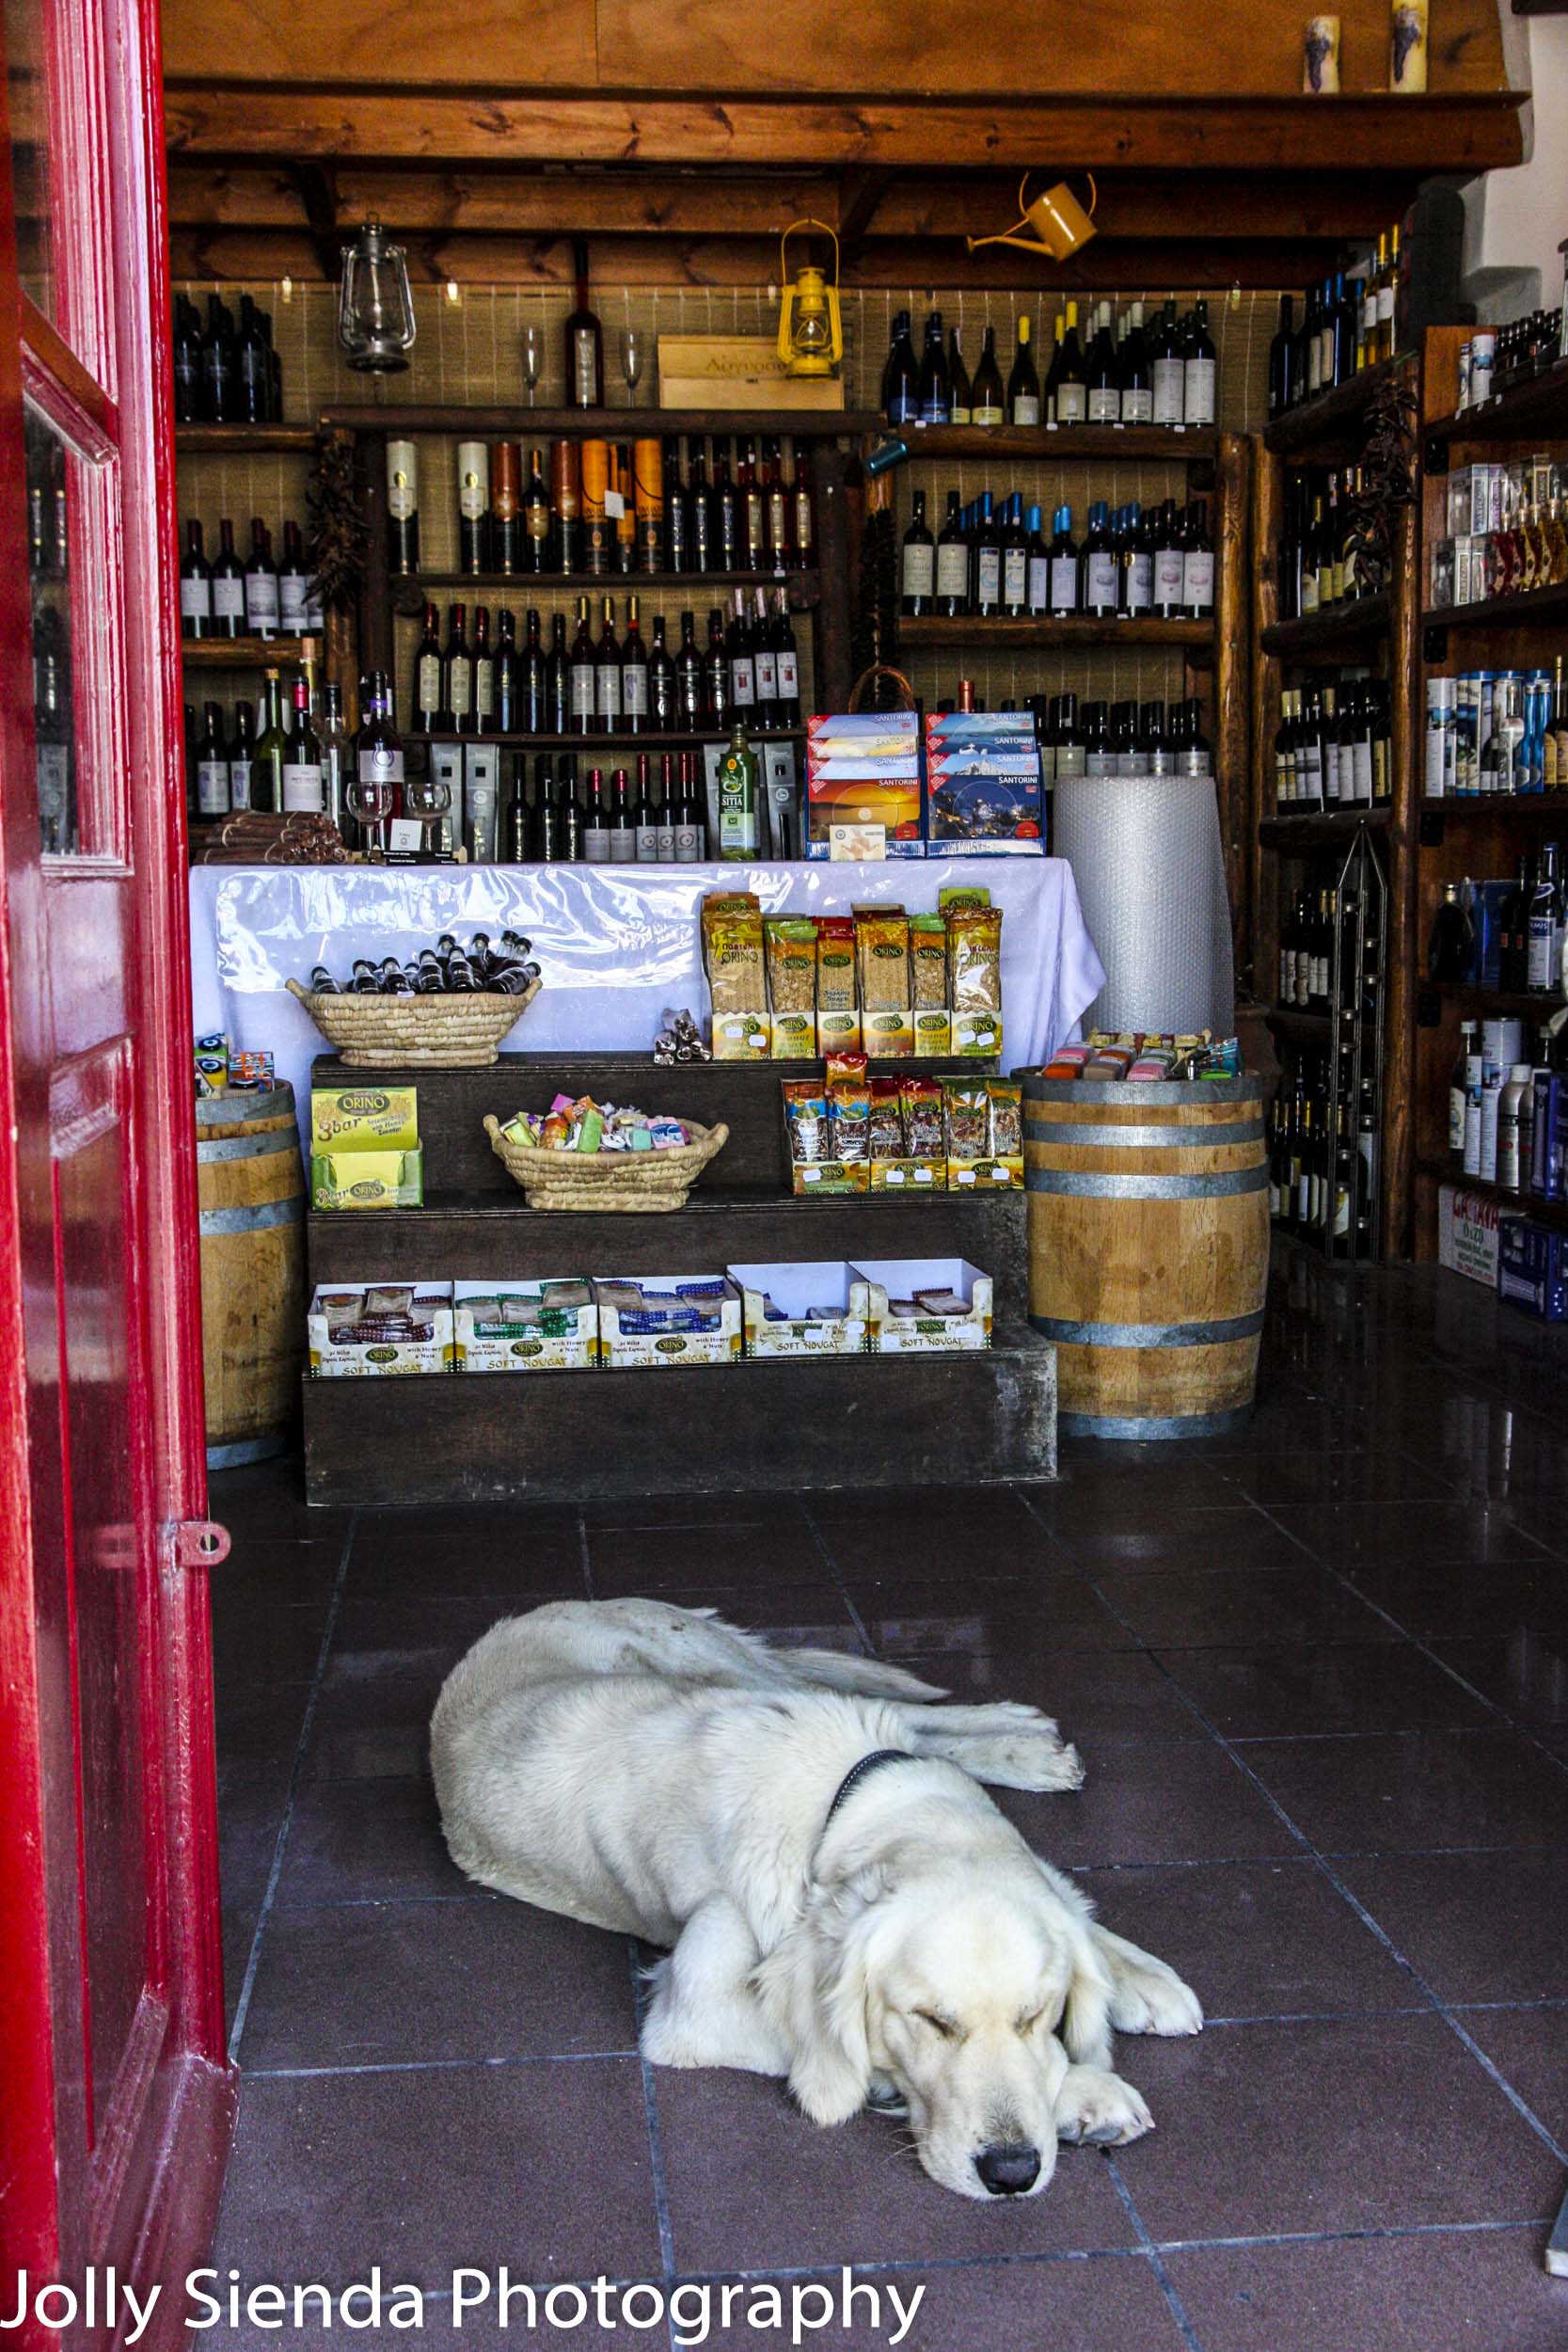 Sleeping dog lies on tile floor in a shop with a red door